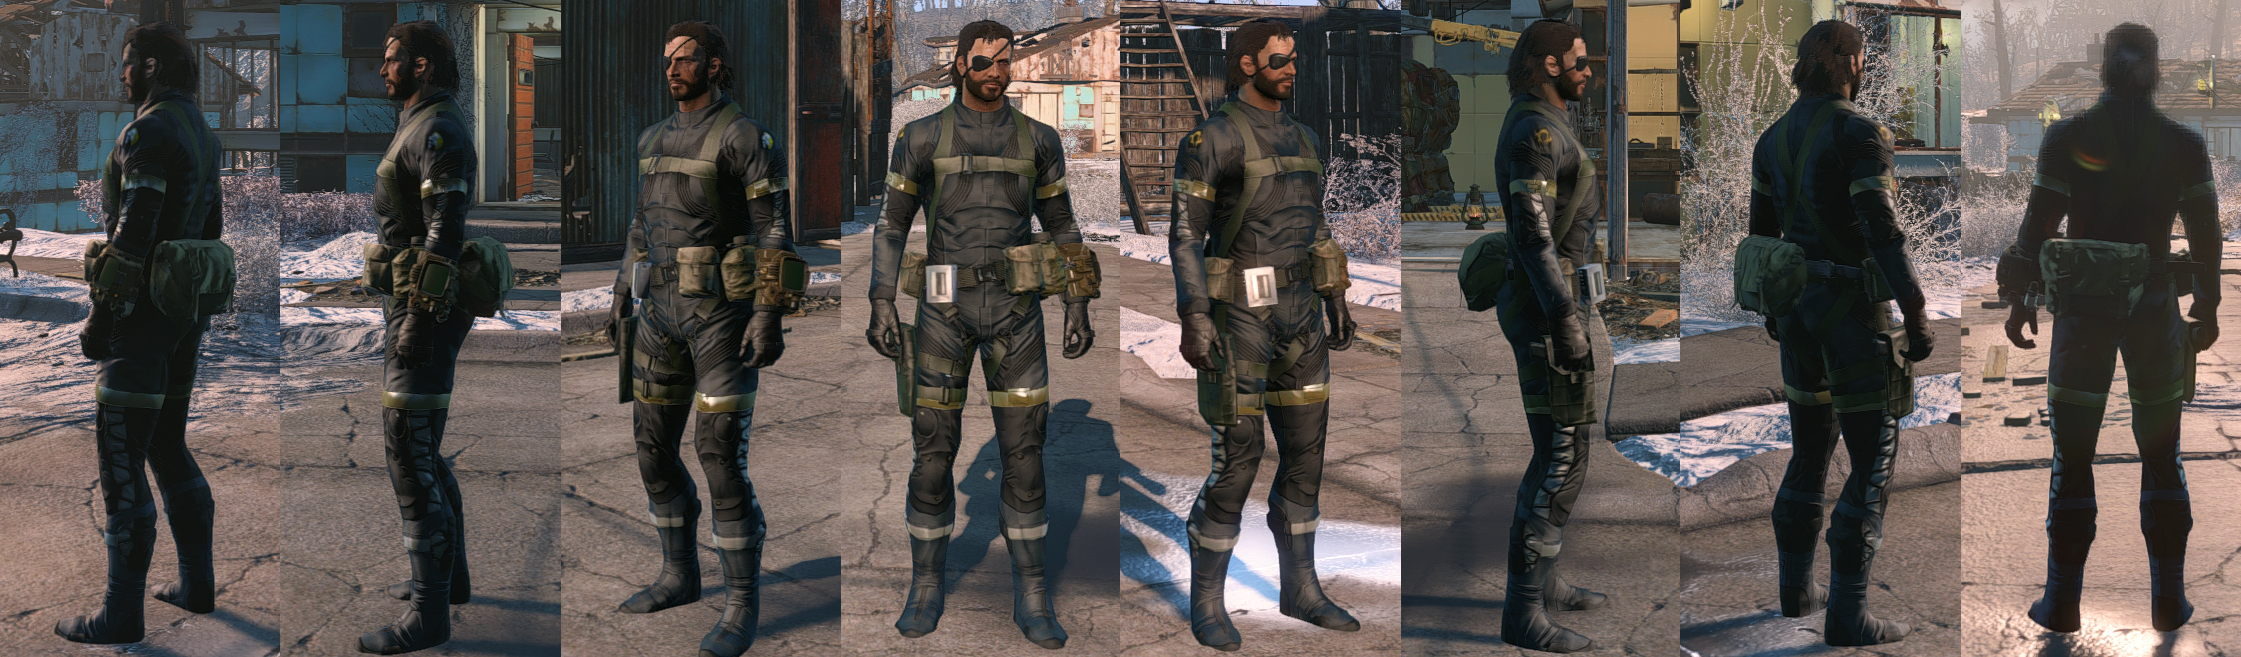 Fallout 4 Military Uniform Mod